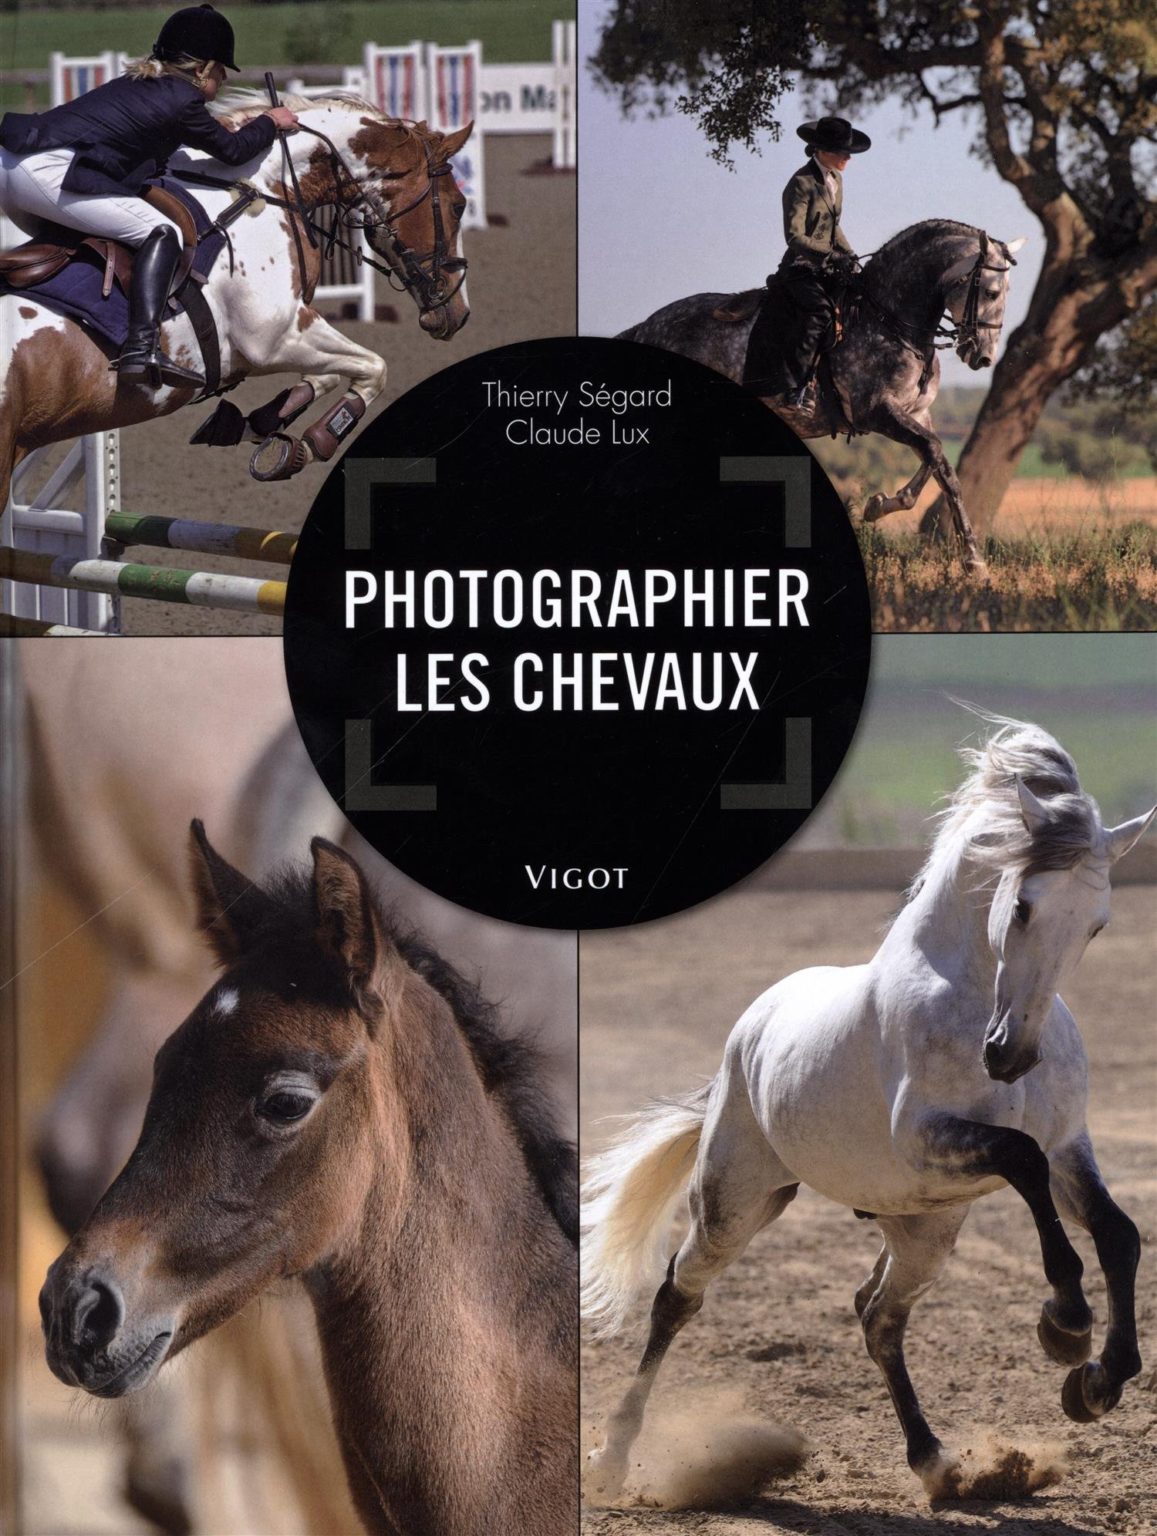 Chevaux et Equitations Vigot - Equestra